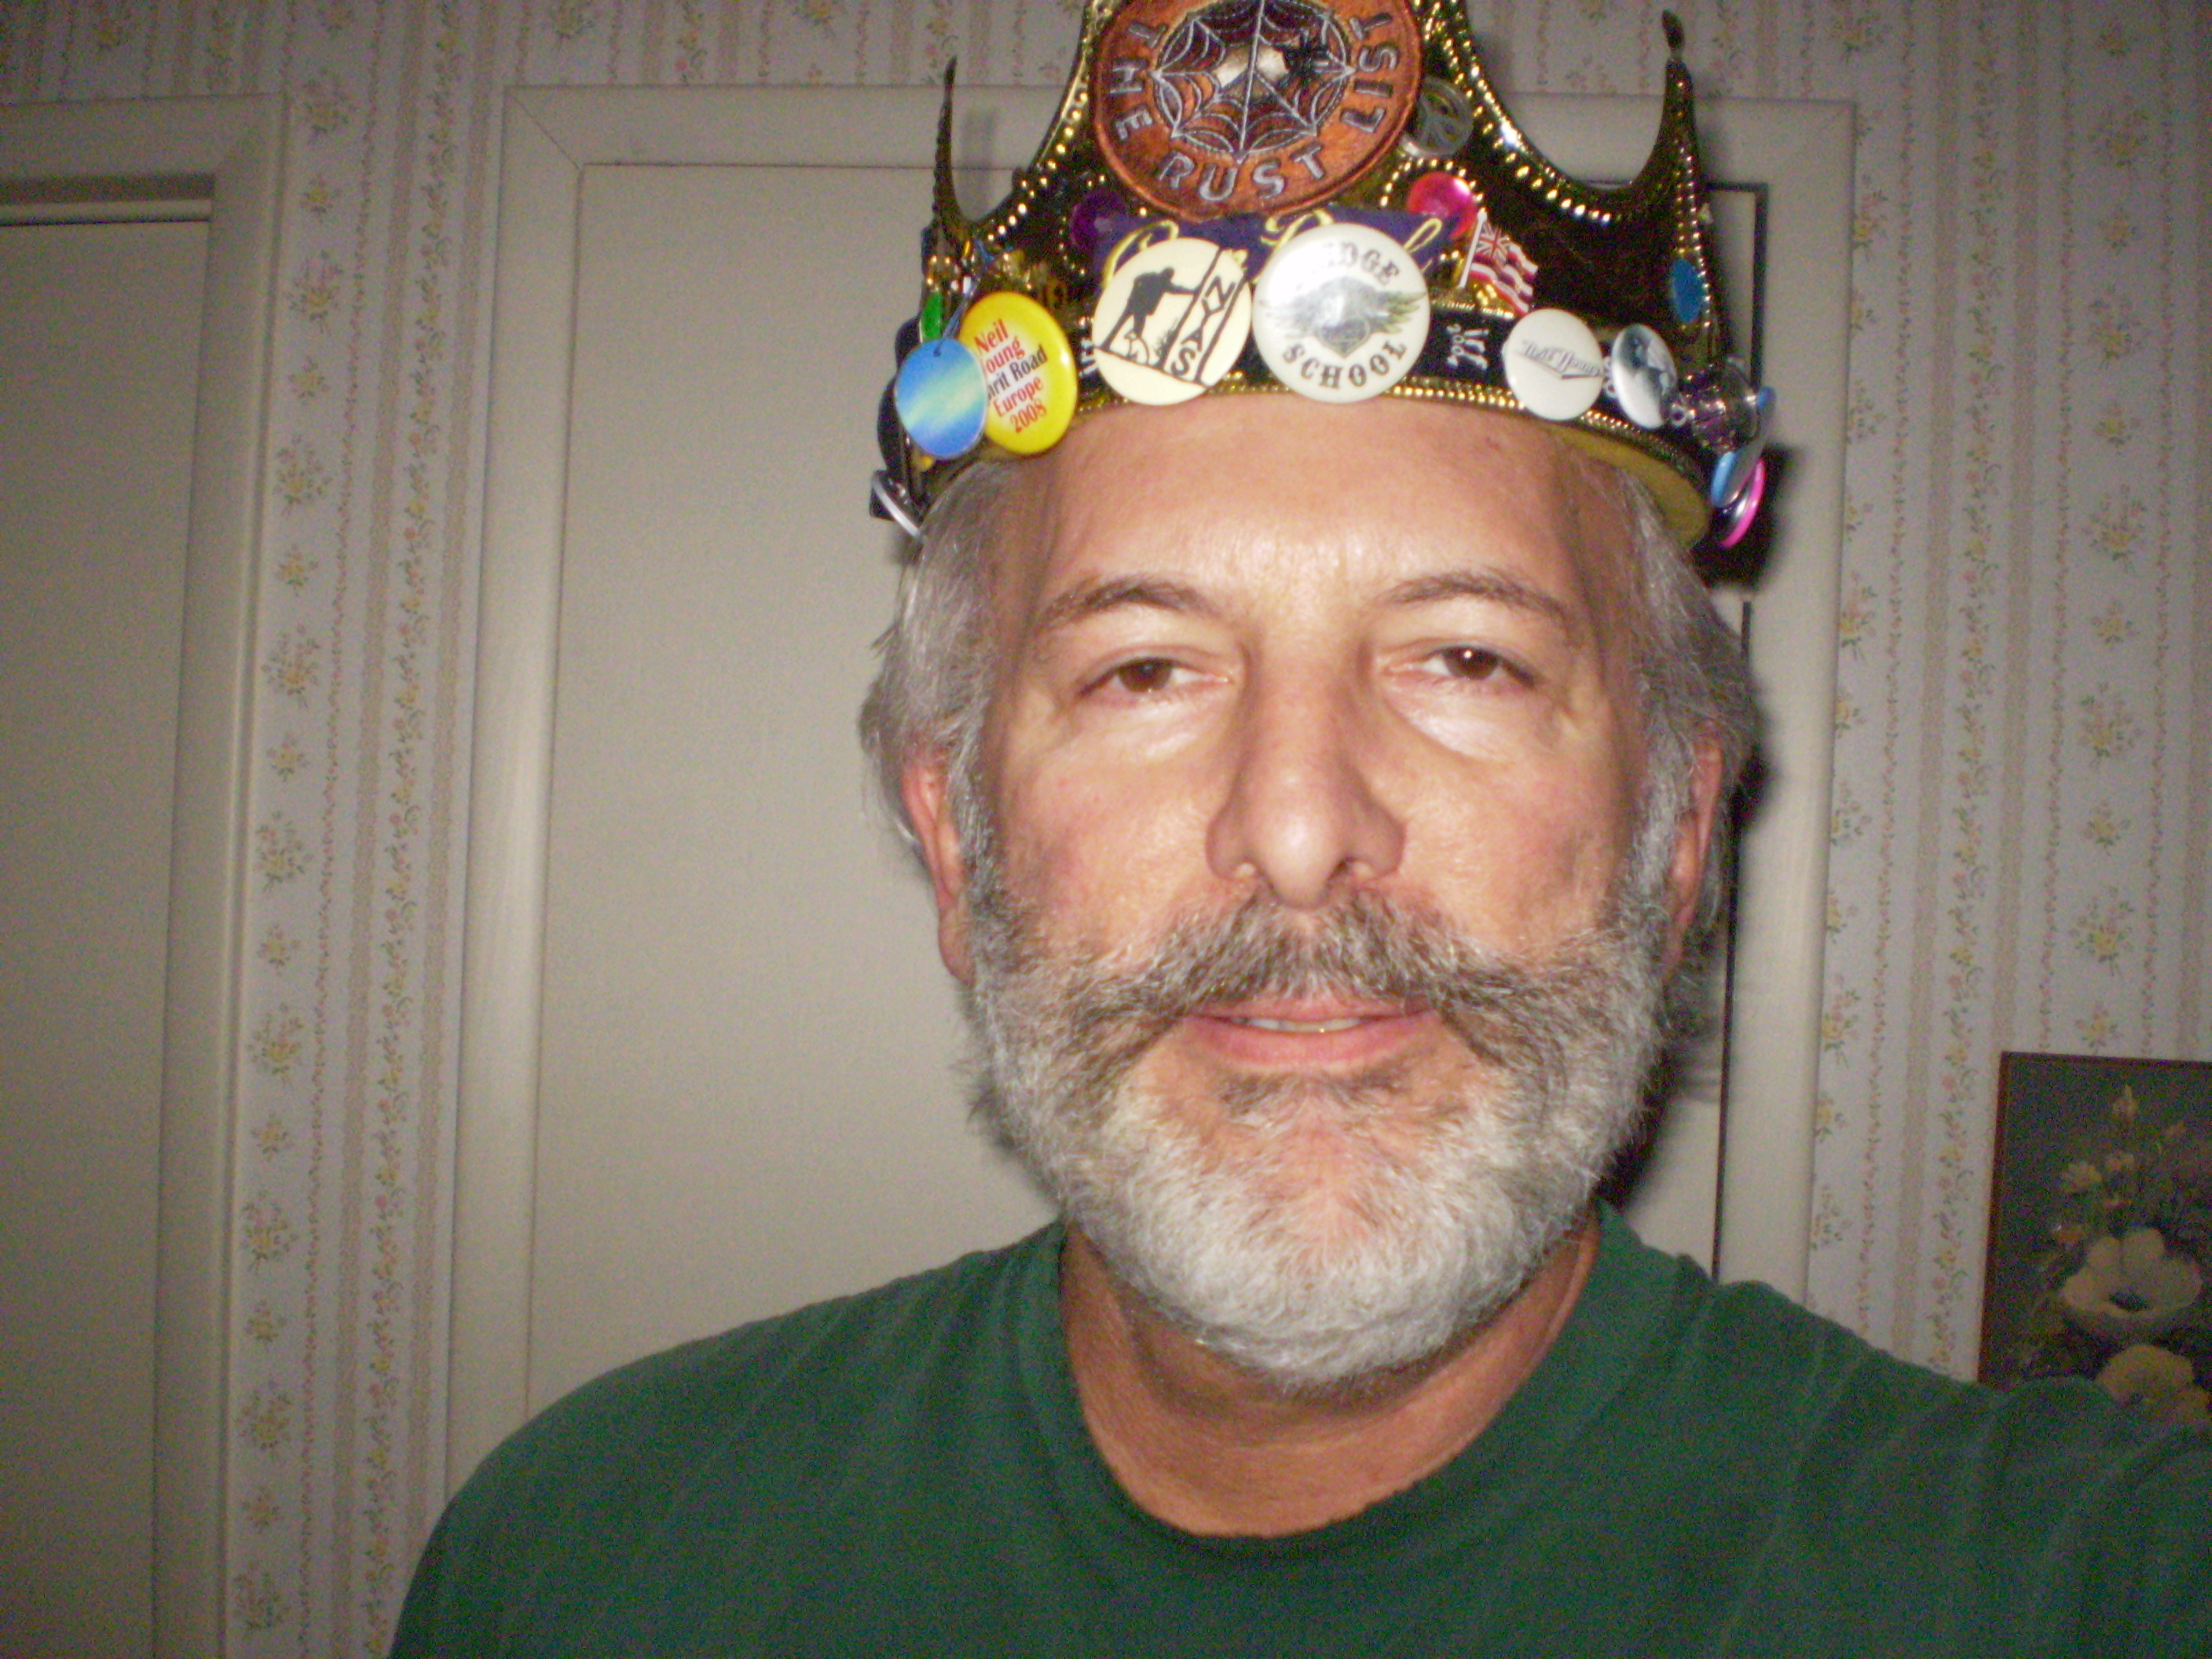 Photo of John wearing the ROTM crown